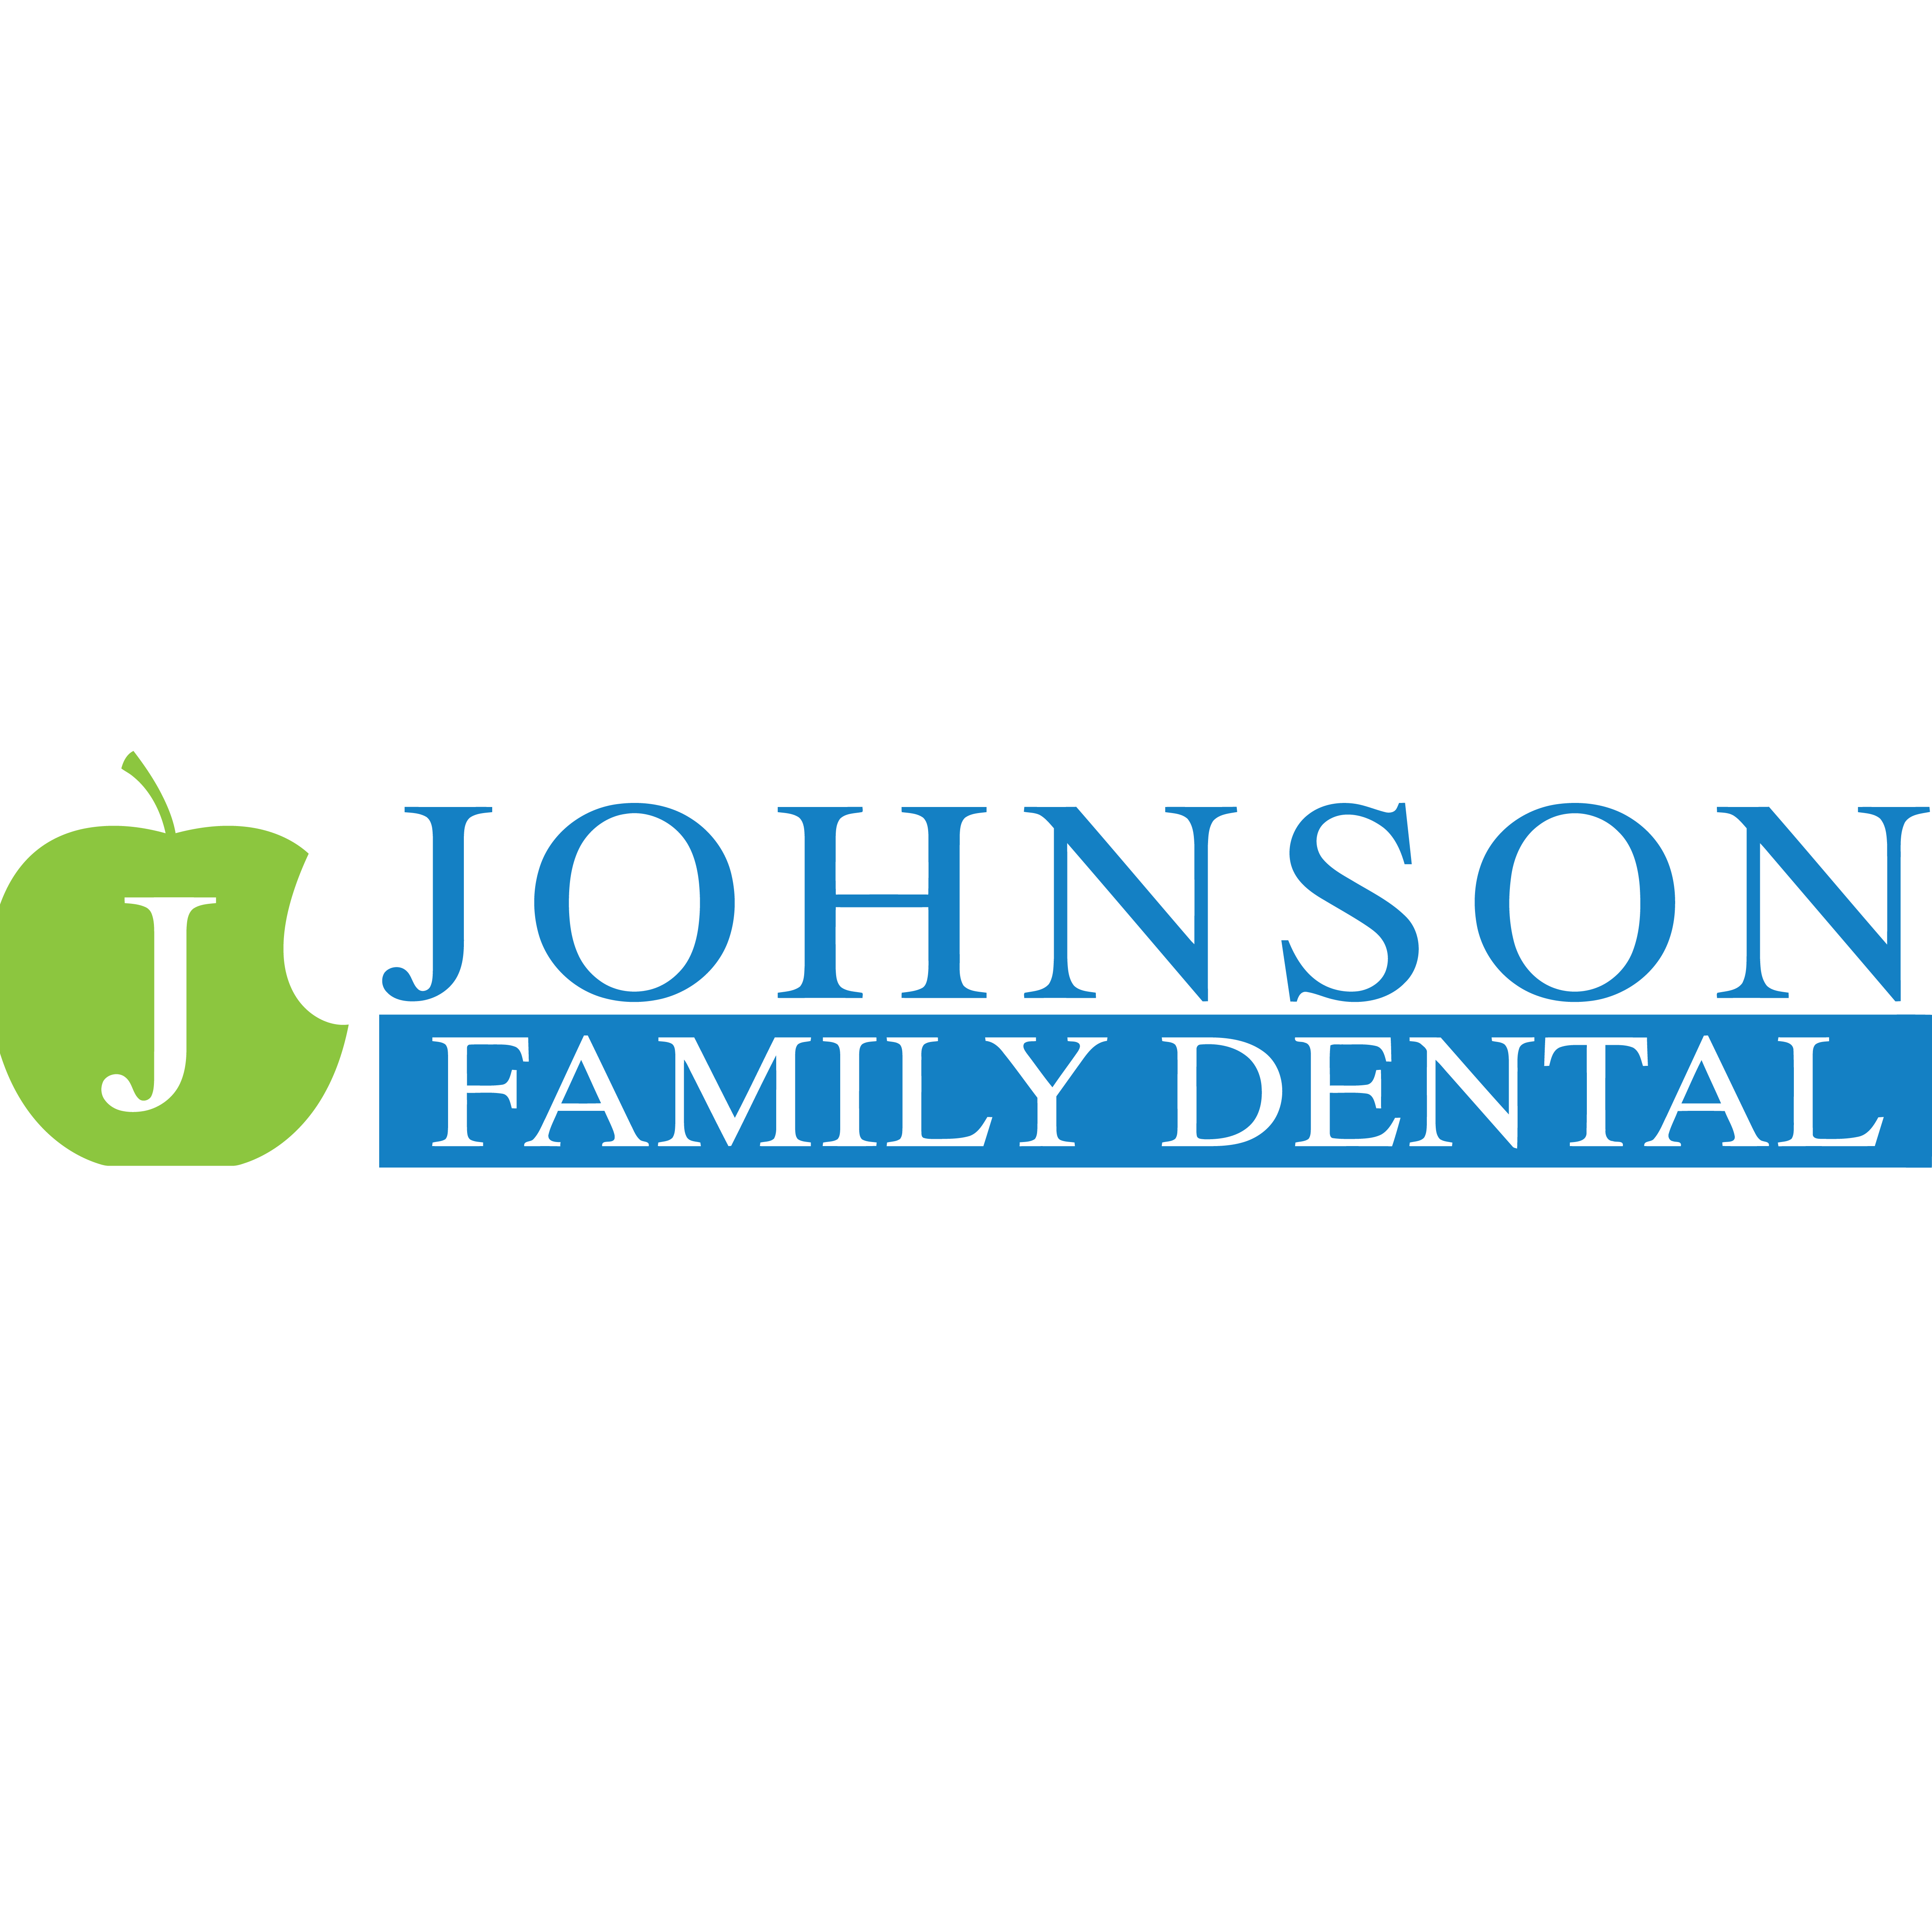 Johnson Family Dental - Solvang - Solvang, CA 93463 - (805)688-9999 | ShowMeLocal.com